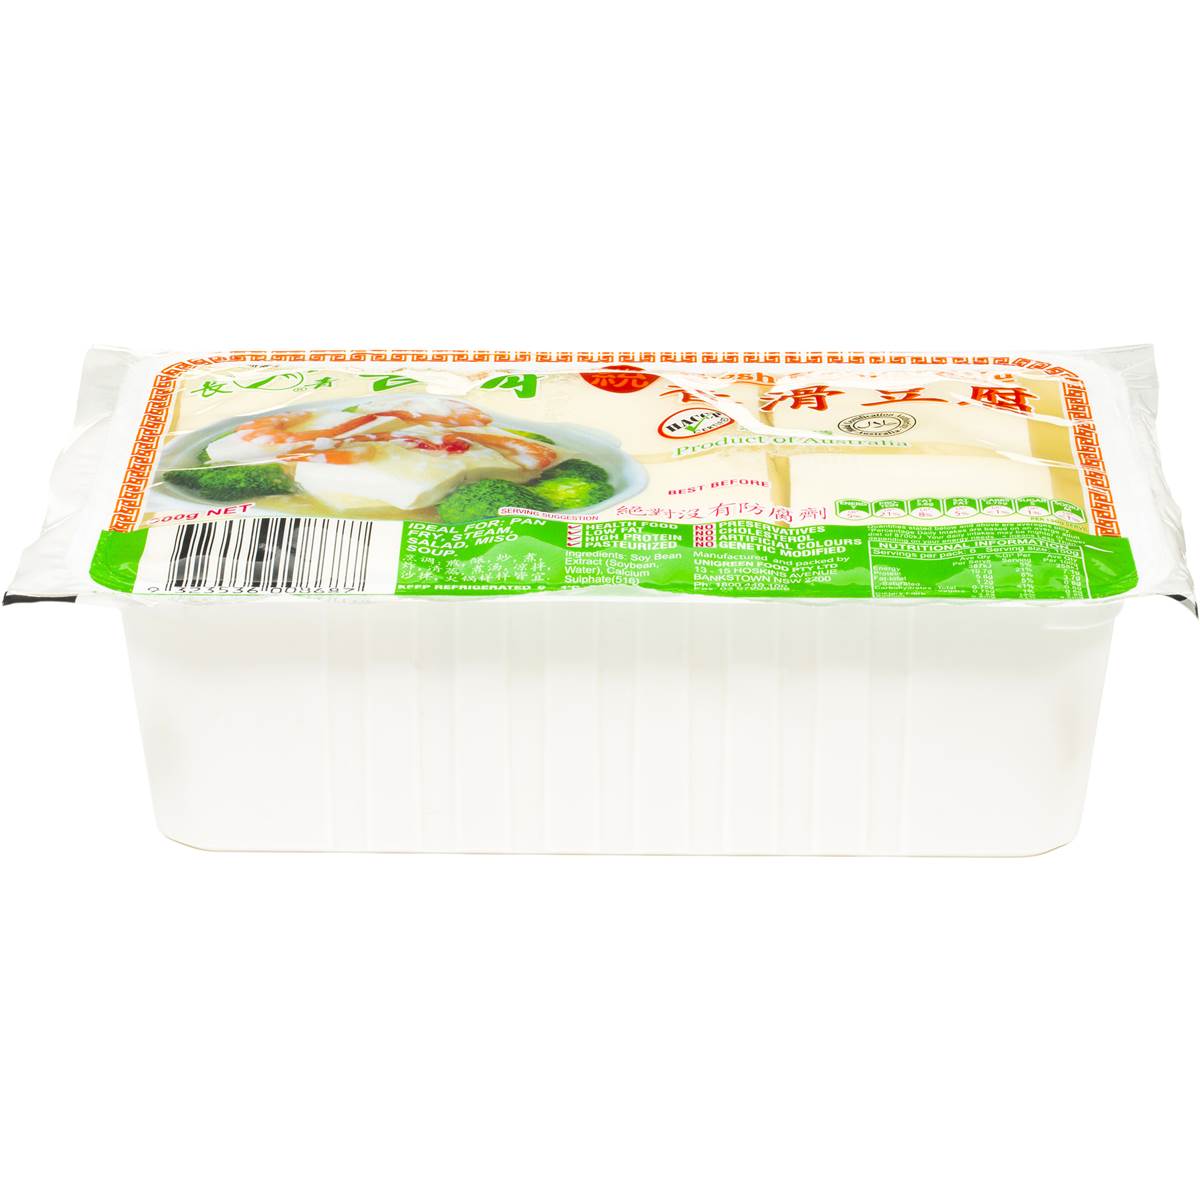 Calories in Evergreen Regular Tofu